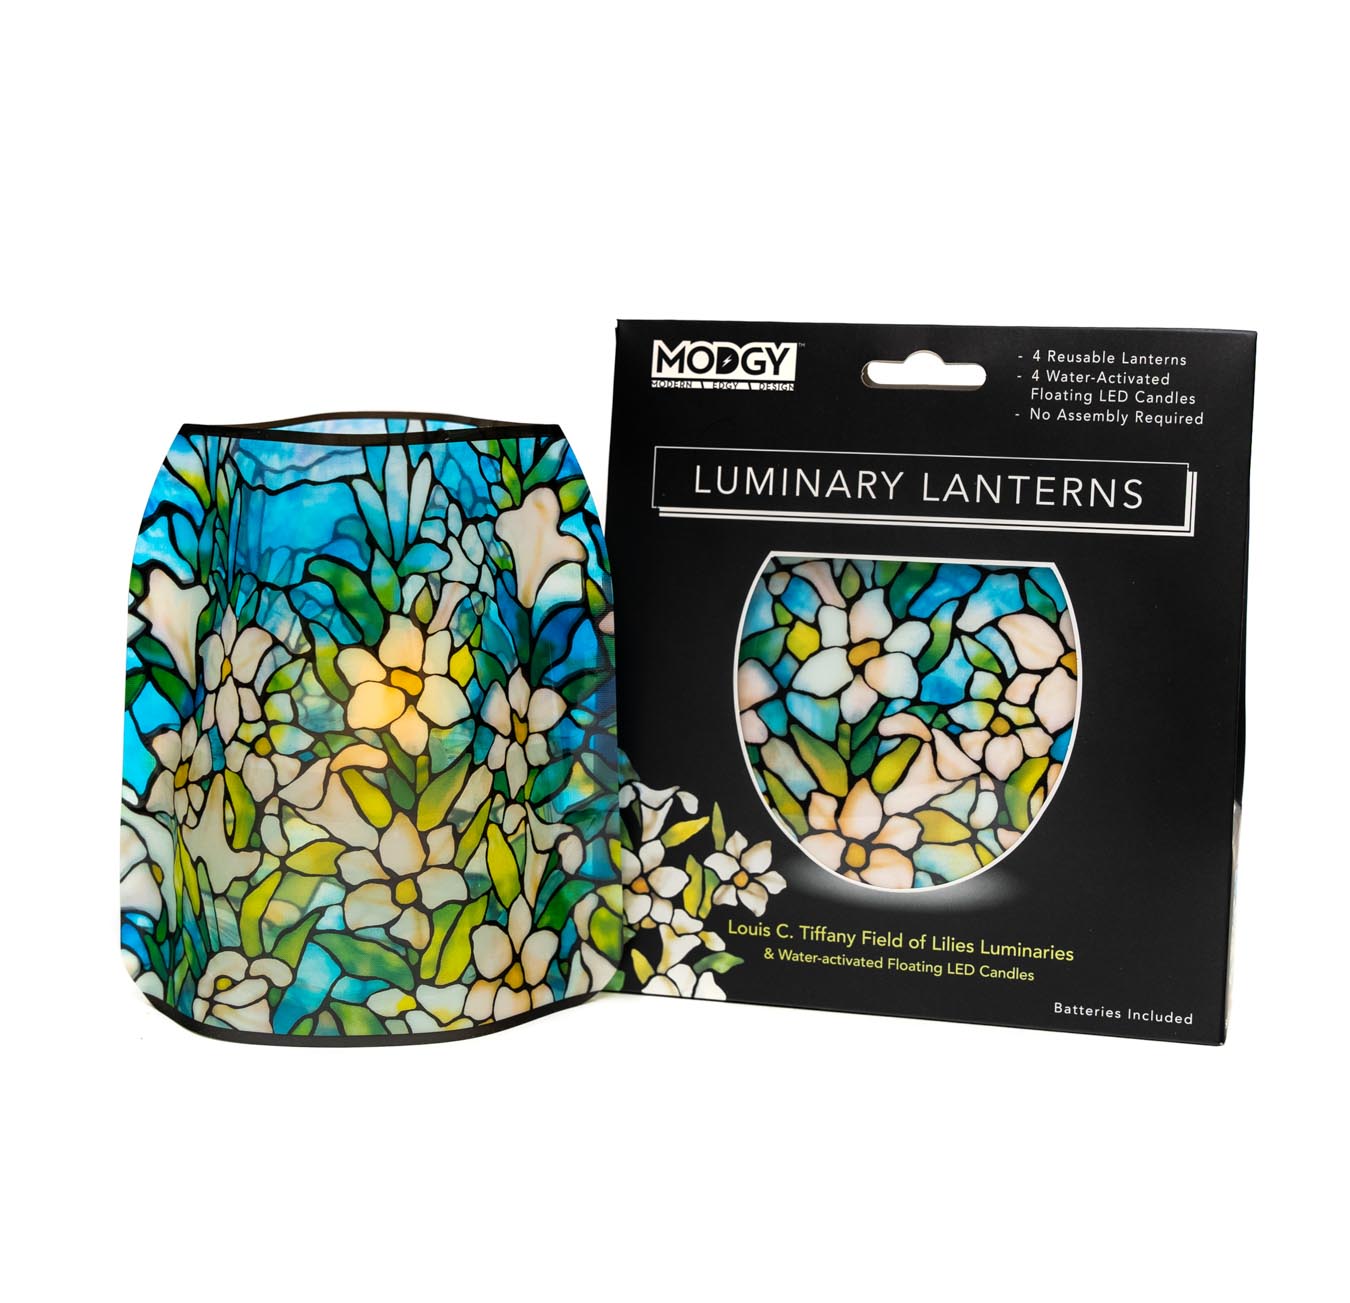 Louis C. Tiffany Field Of Lilies Luminaries